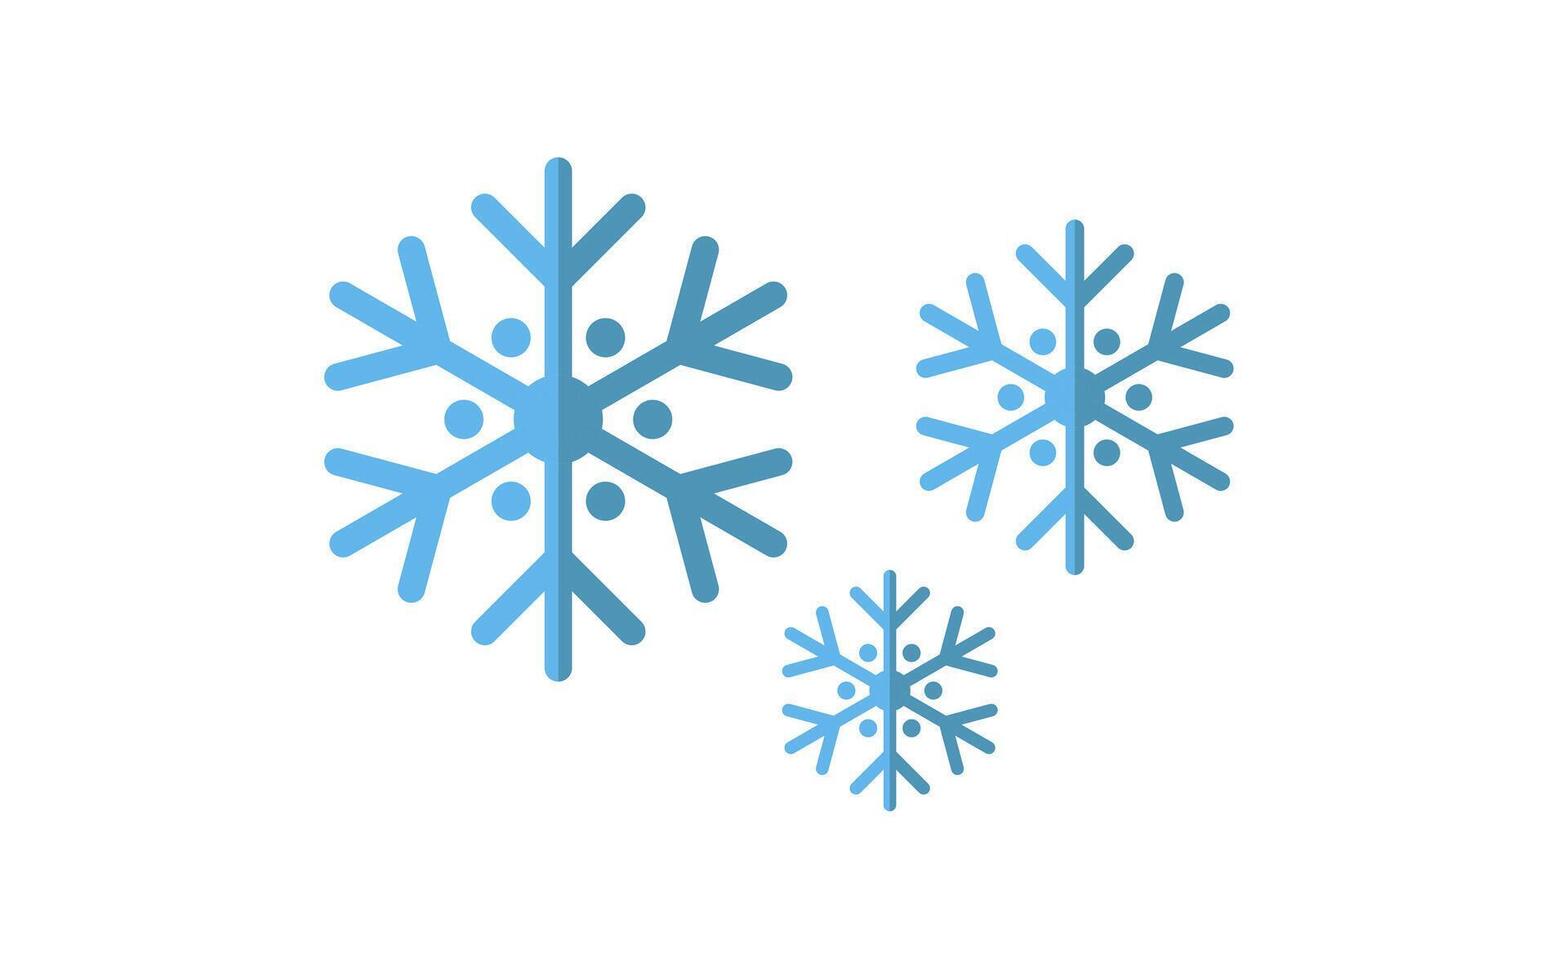 snowflake vector illustration